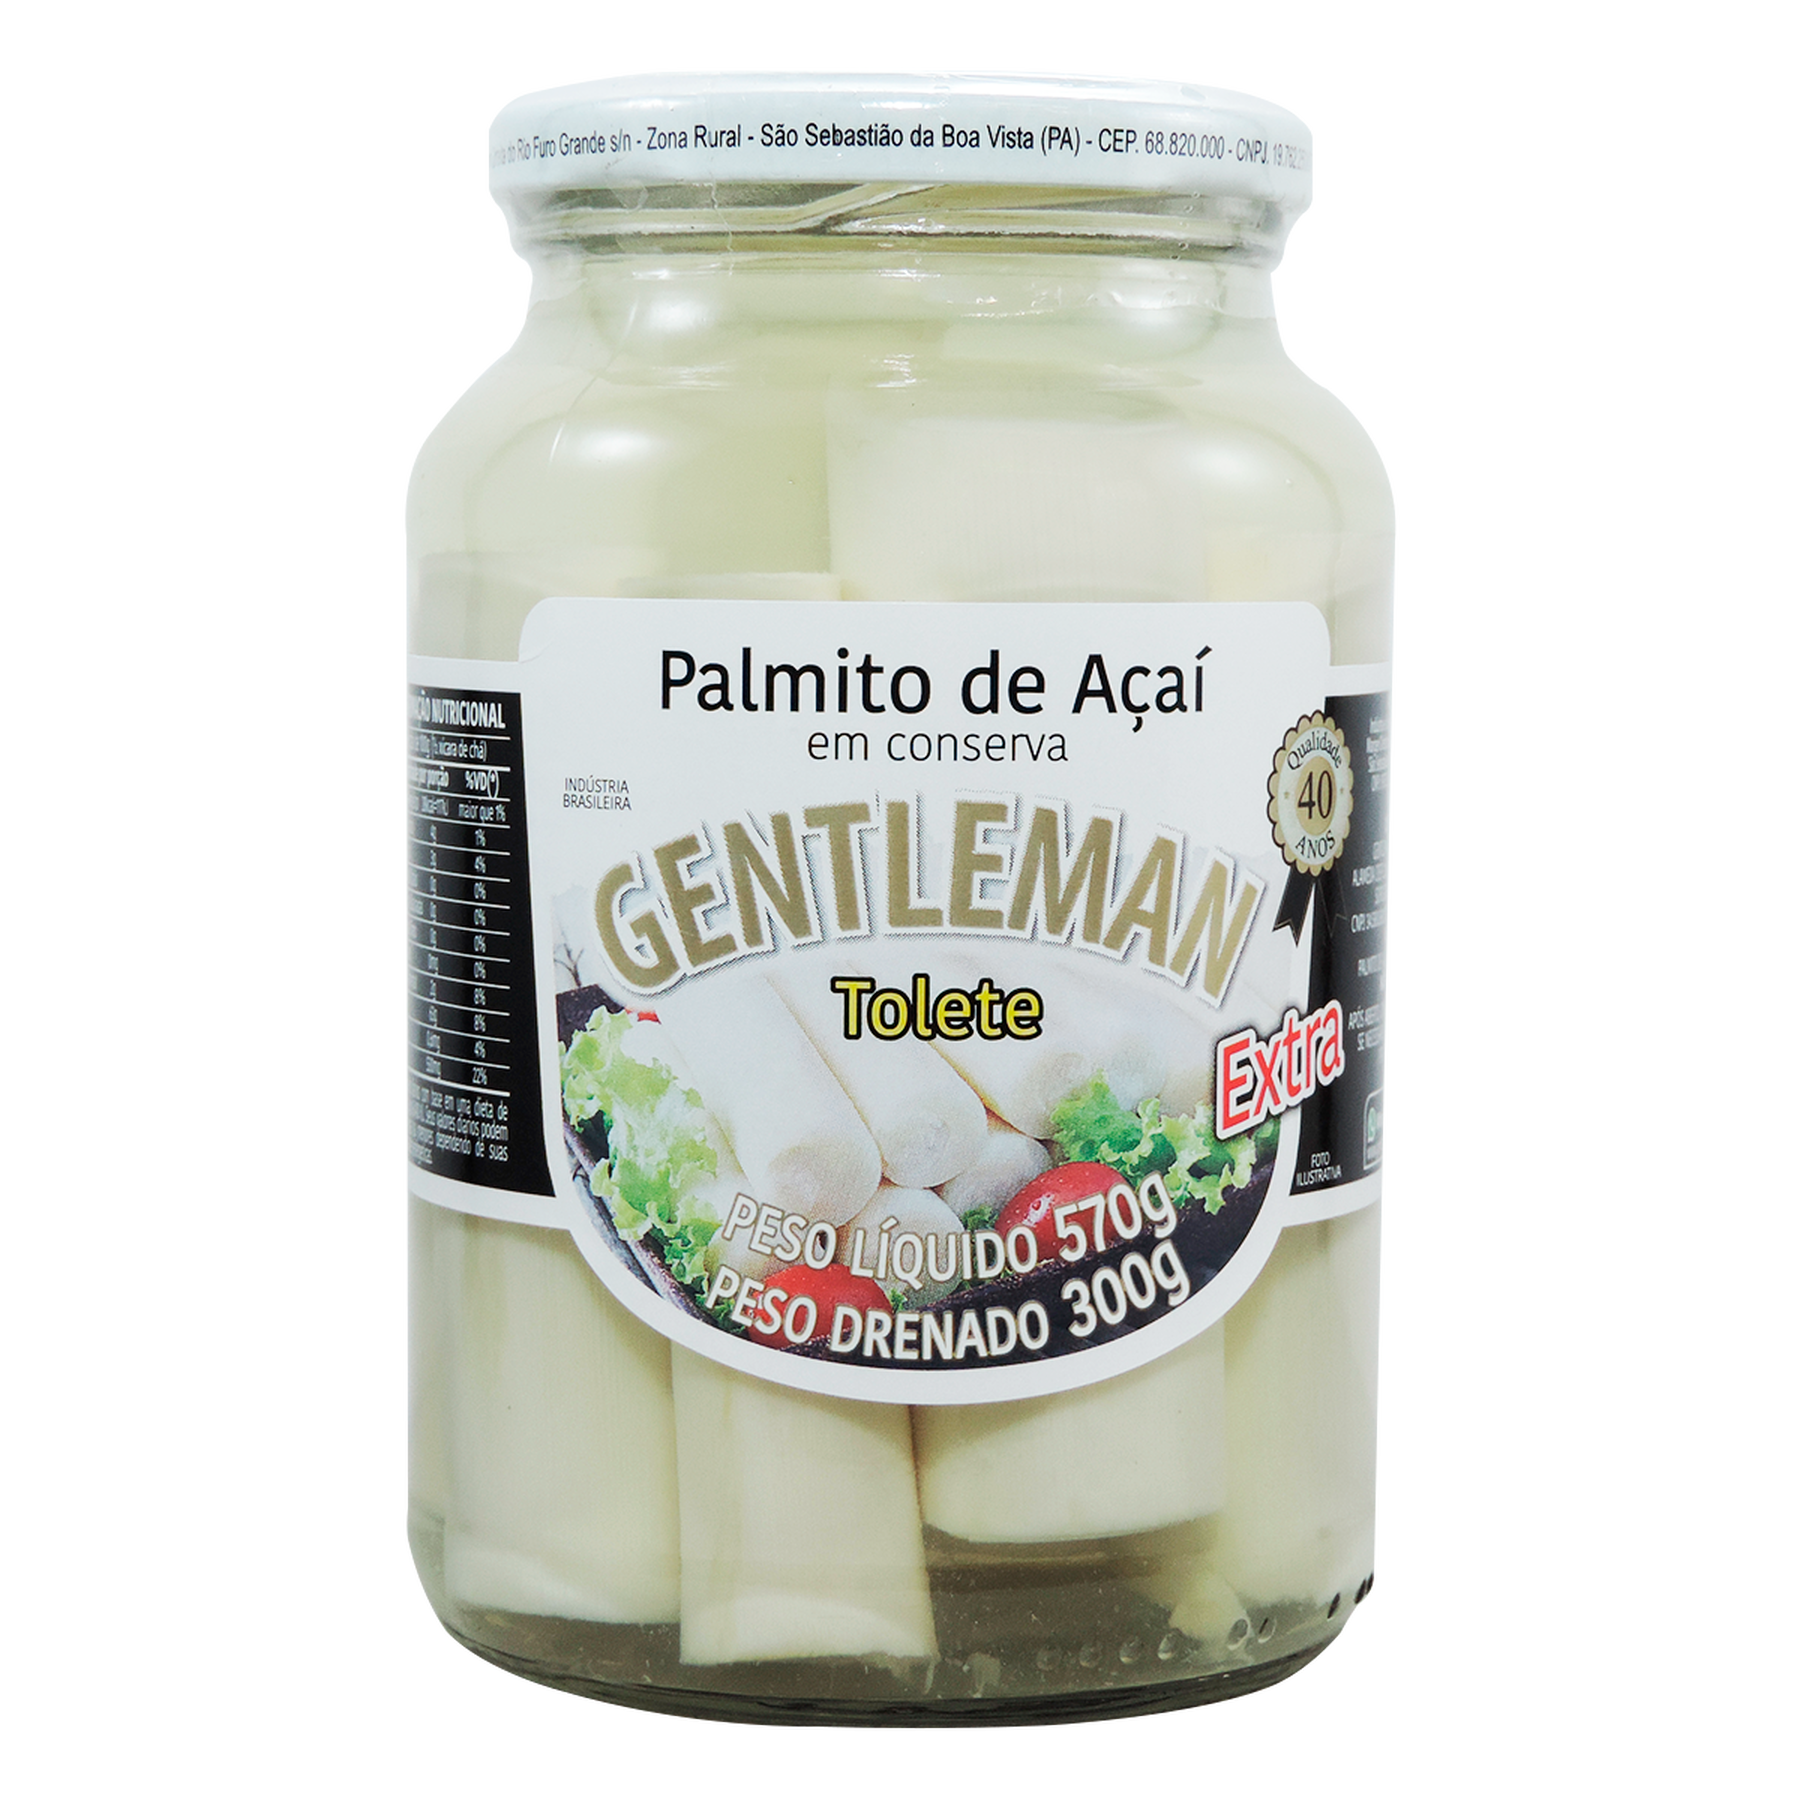 Palmito Gentleman Extra 300g